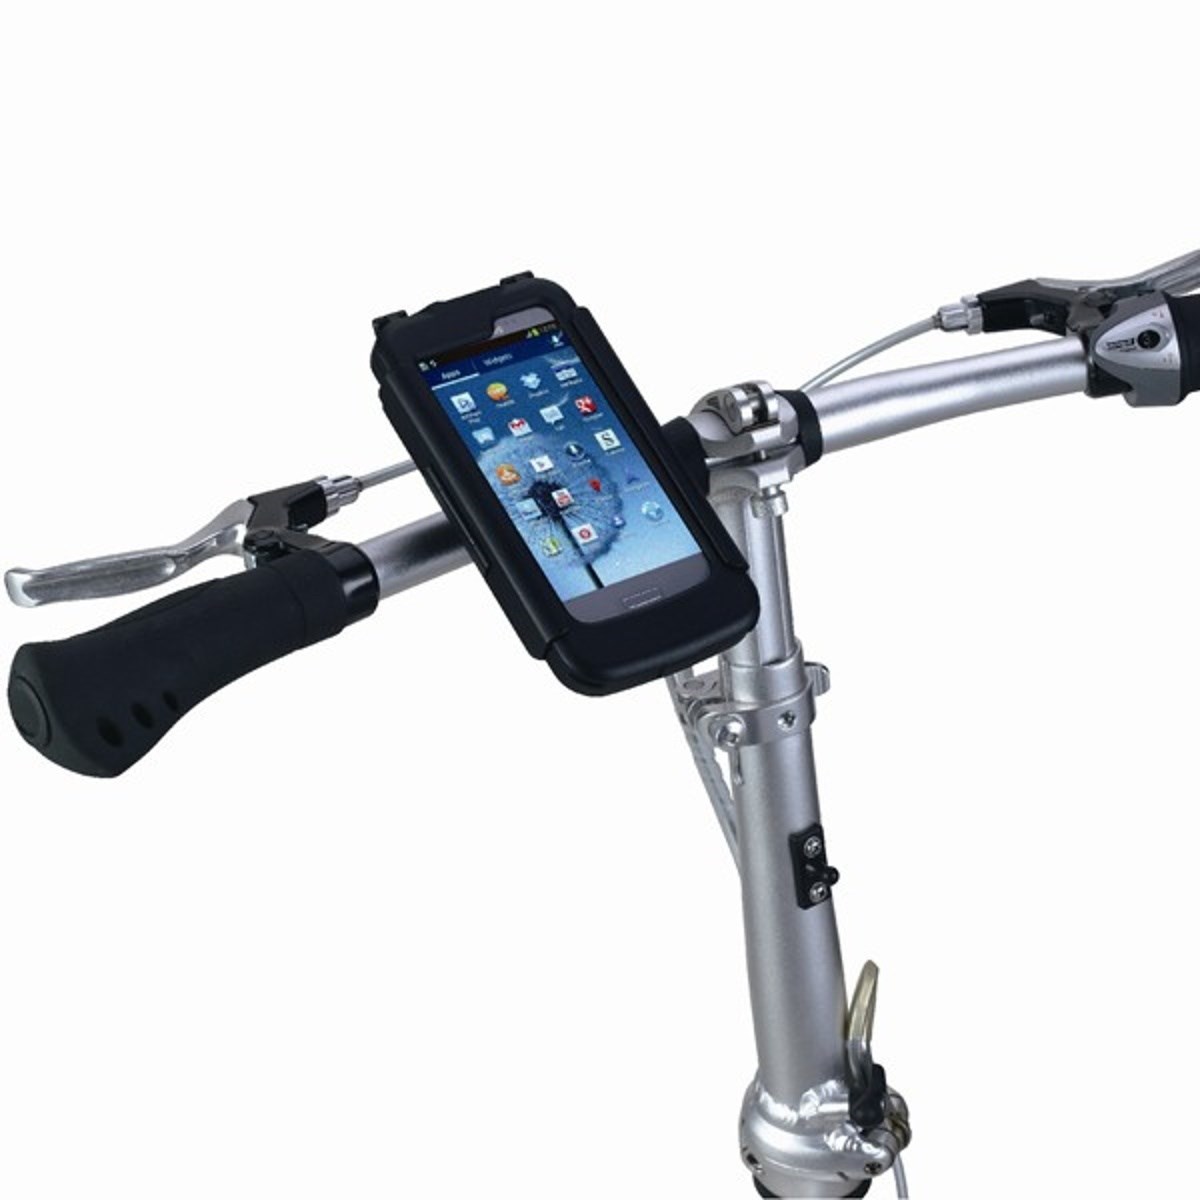 Cyclewiz BikeConsole Bike Mount For Galaxy SIII (S3) product image